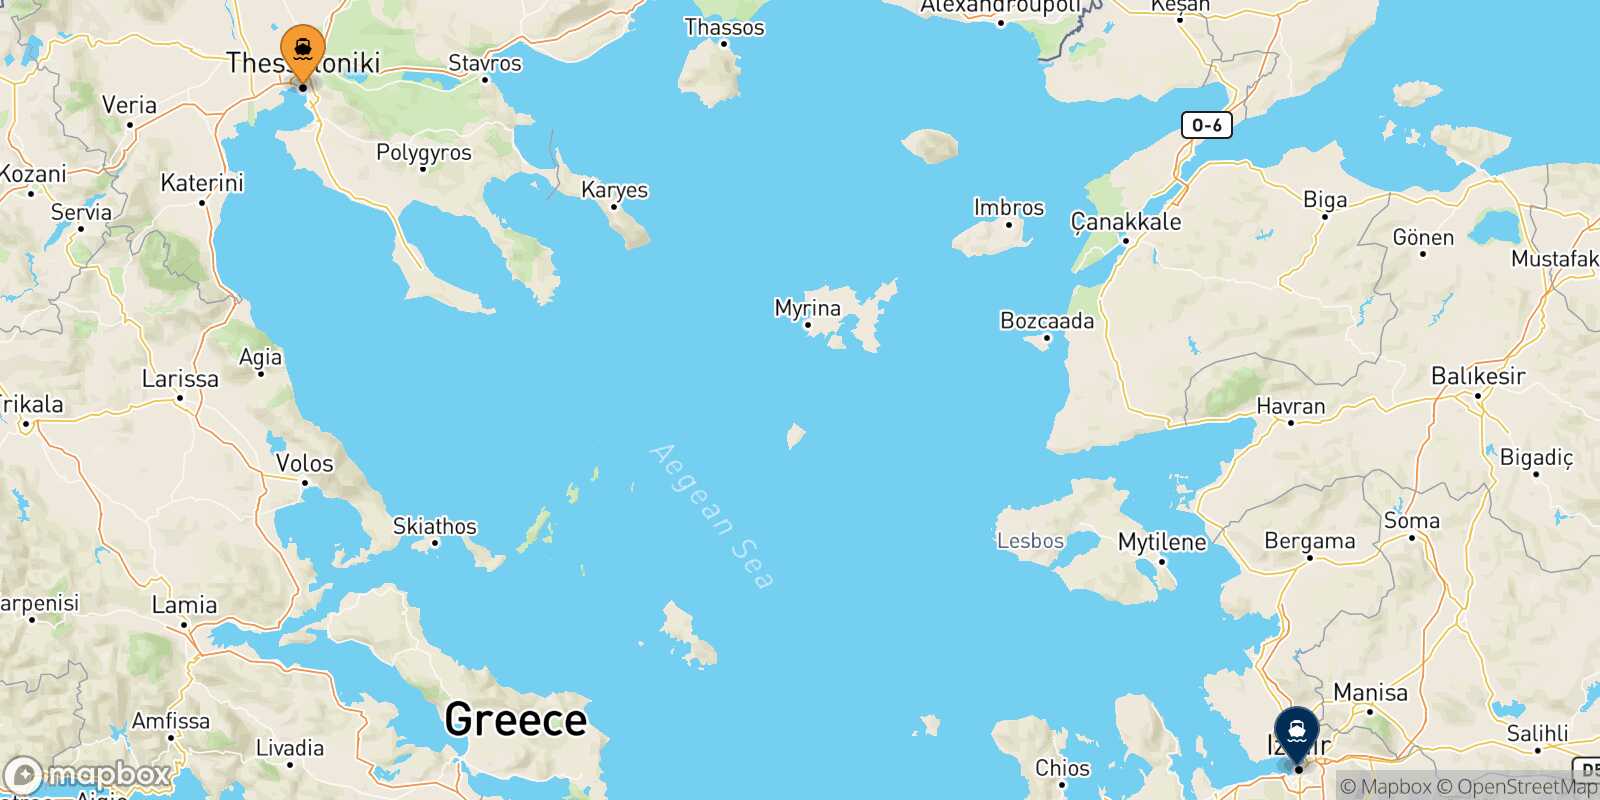 Thessaloniki Izmir route map